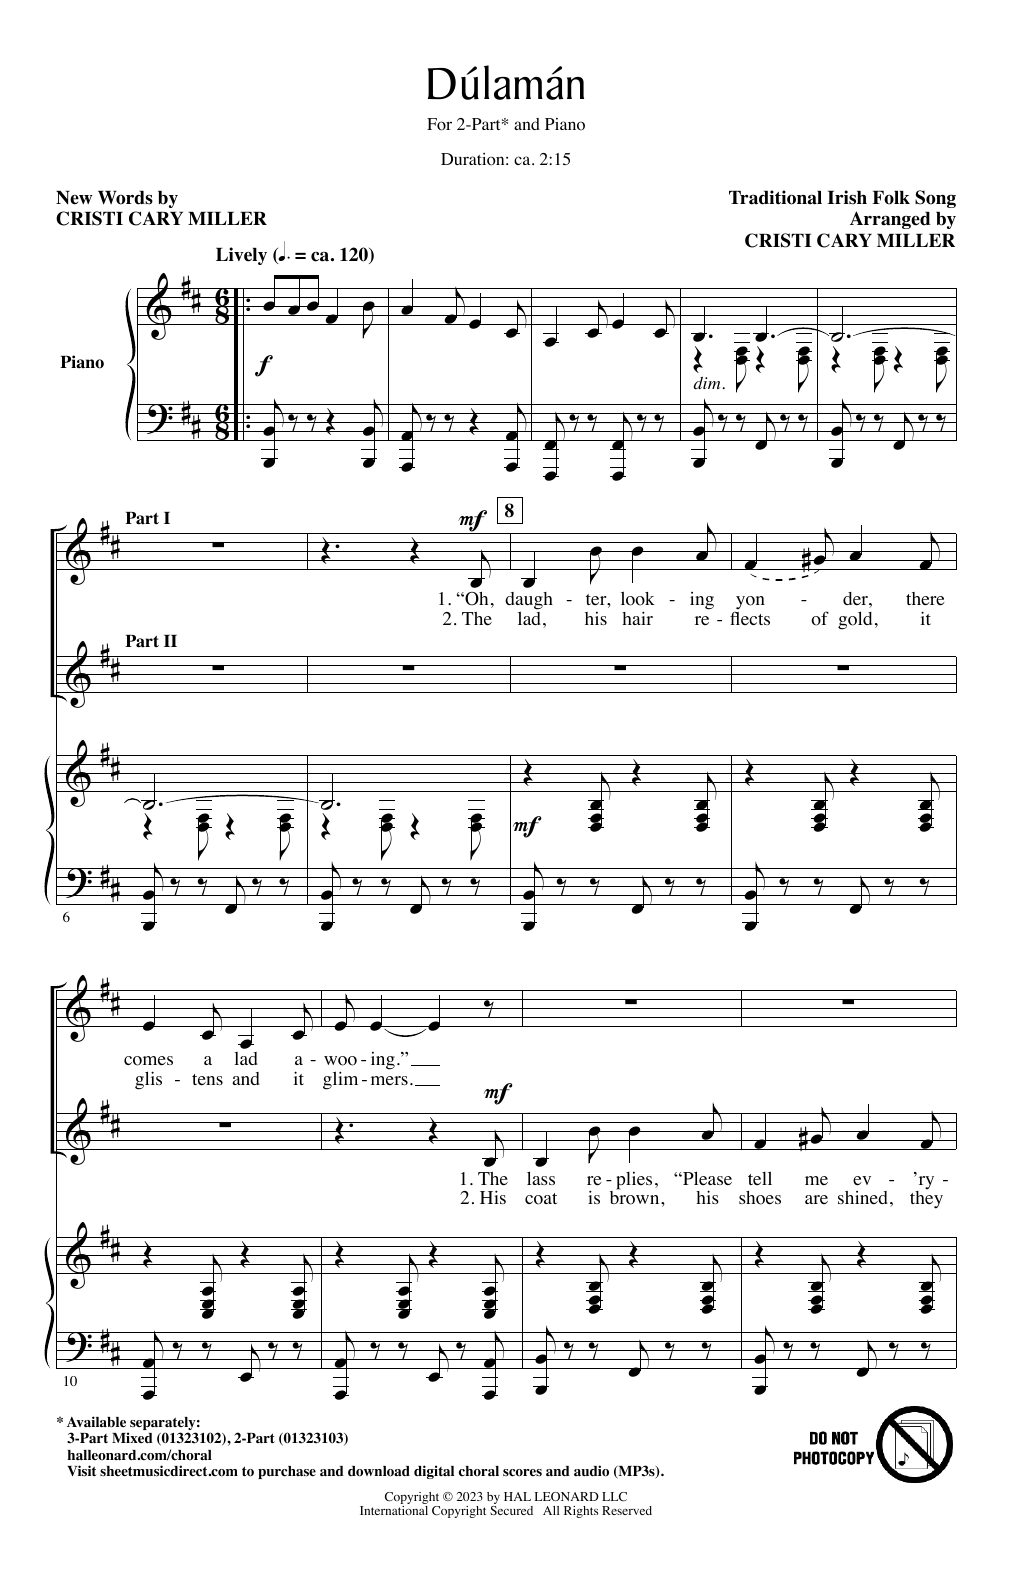 Irish Folk Song Dúlamán (arr. Cristi Cary Miller) Sheet Music Notes & Chords for 3-Part Mixed Choir - Download or Print PDF